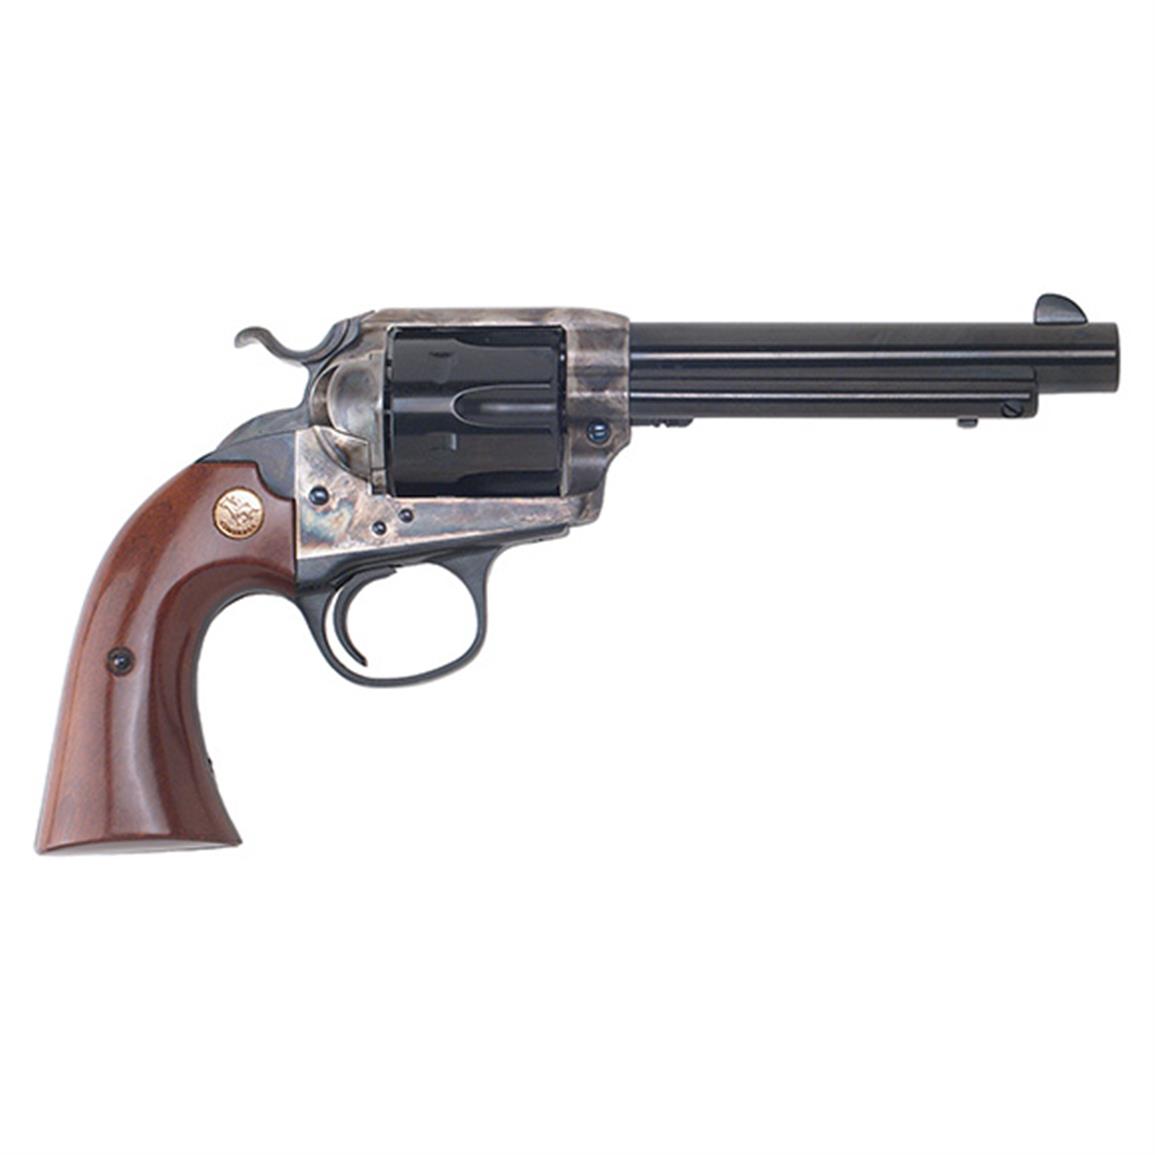 Cimarron Firearms Co. Uberti Bisley Target Model, Revolver, .45 Colt, 5.5" Barrel, 6 Rounds